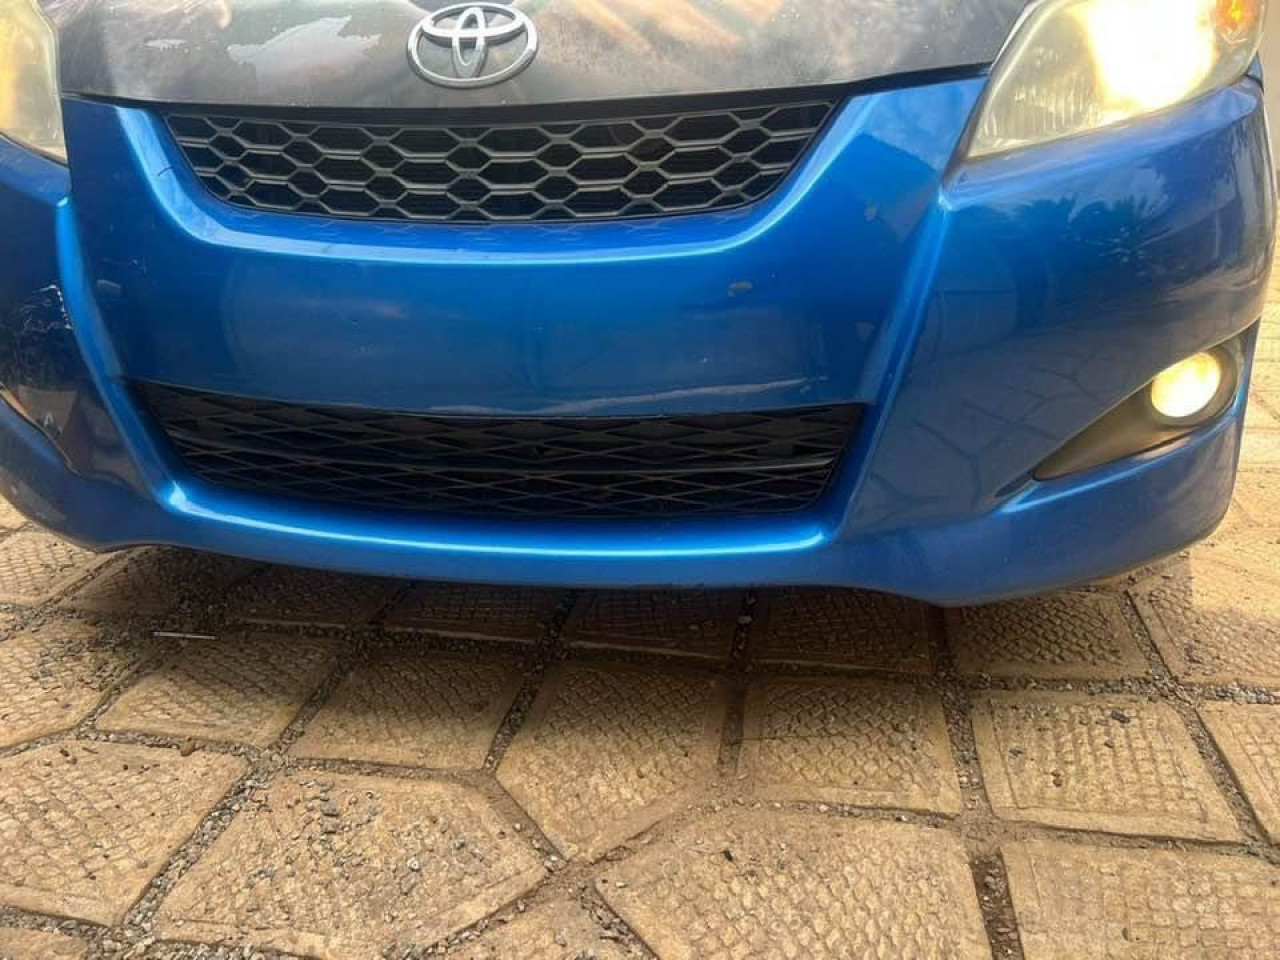 Toyota Matrix, Voitures, Conakry